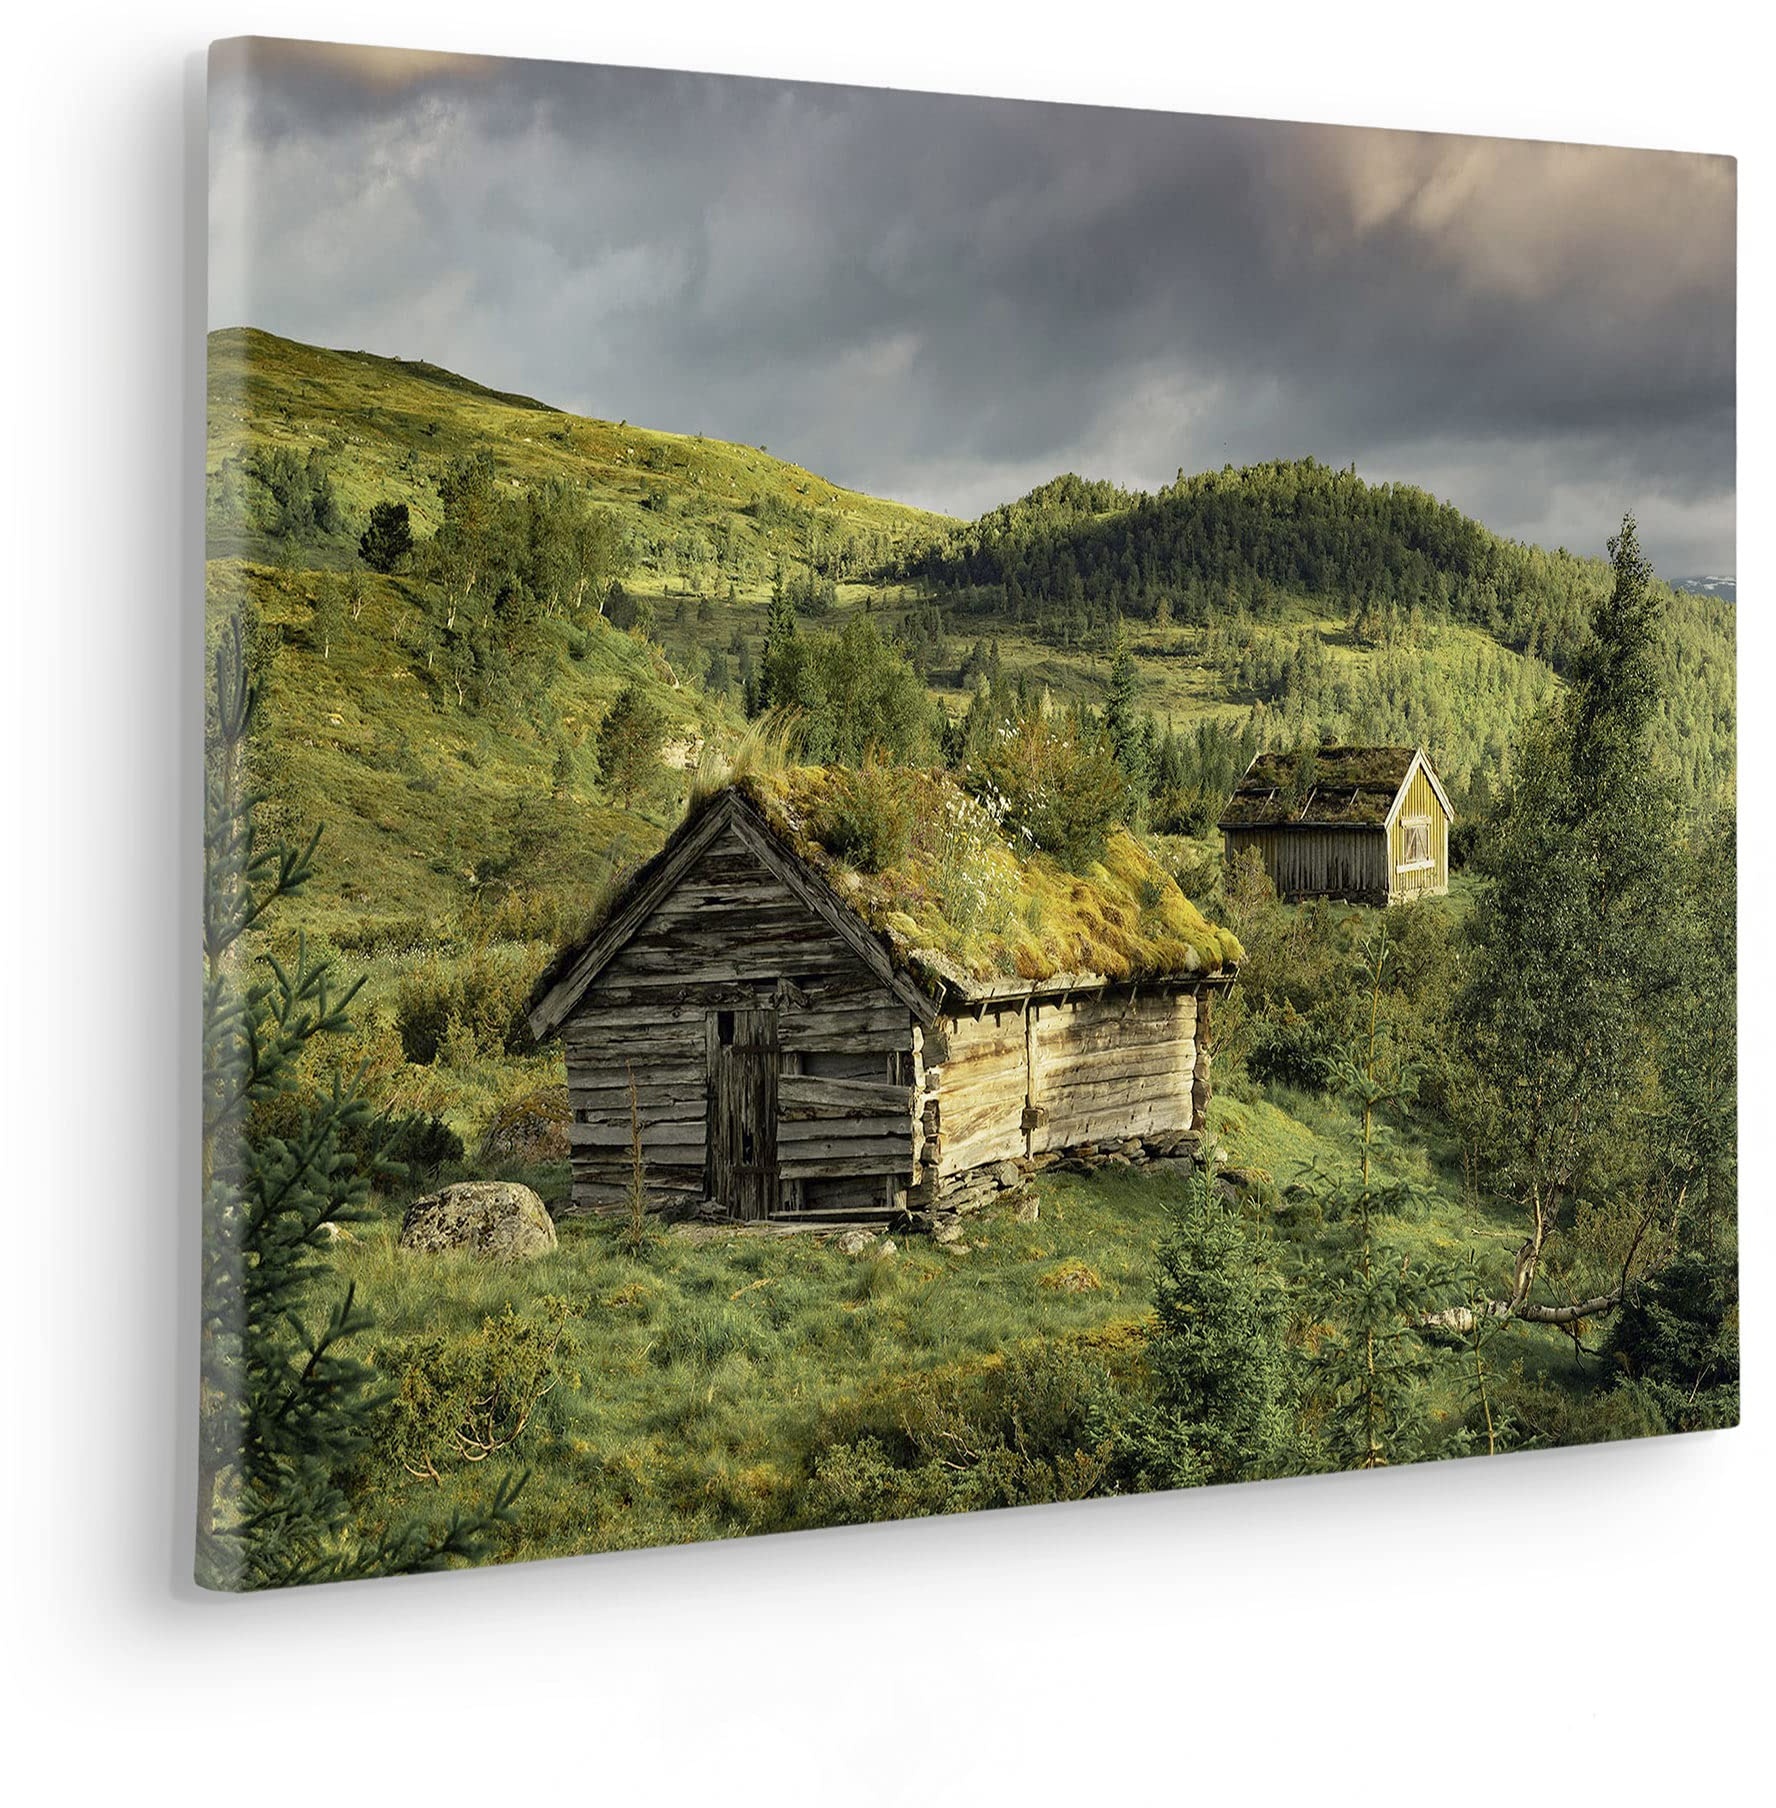 Komar Keilrahmenbild im Echtholzrahmen - Rustic Charme - Größe 60 x 40 cm - Bild, Leinwandbild, Landschaftsmotiv, Wohnzimmer, Schlafzimmer